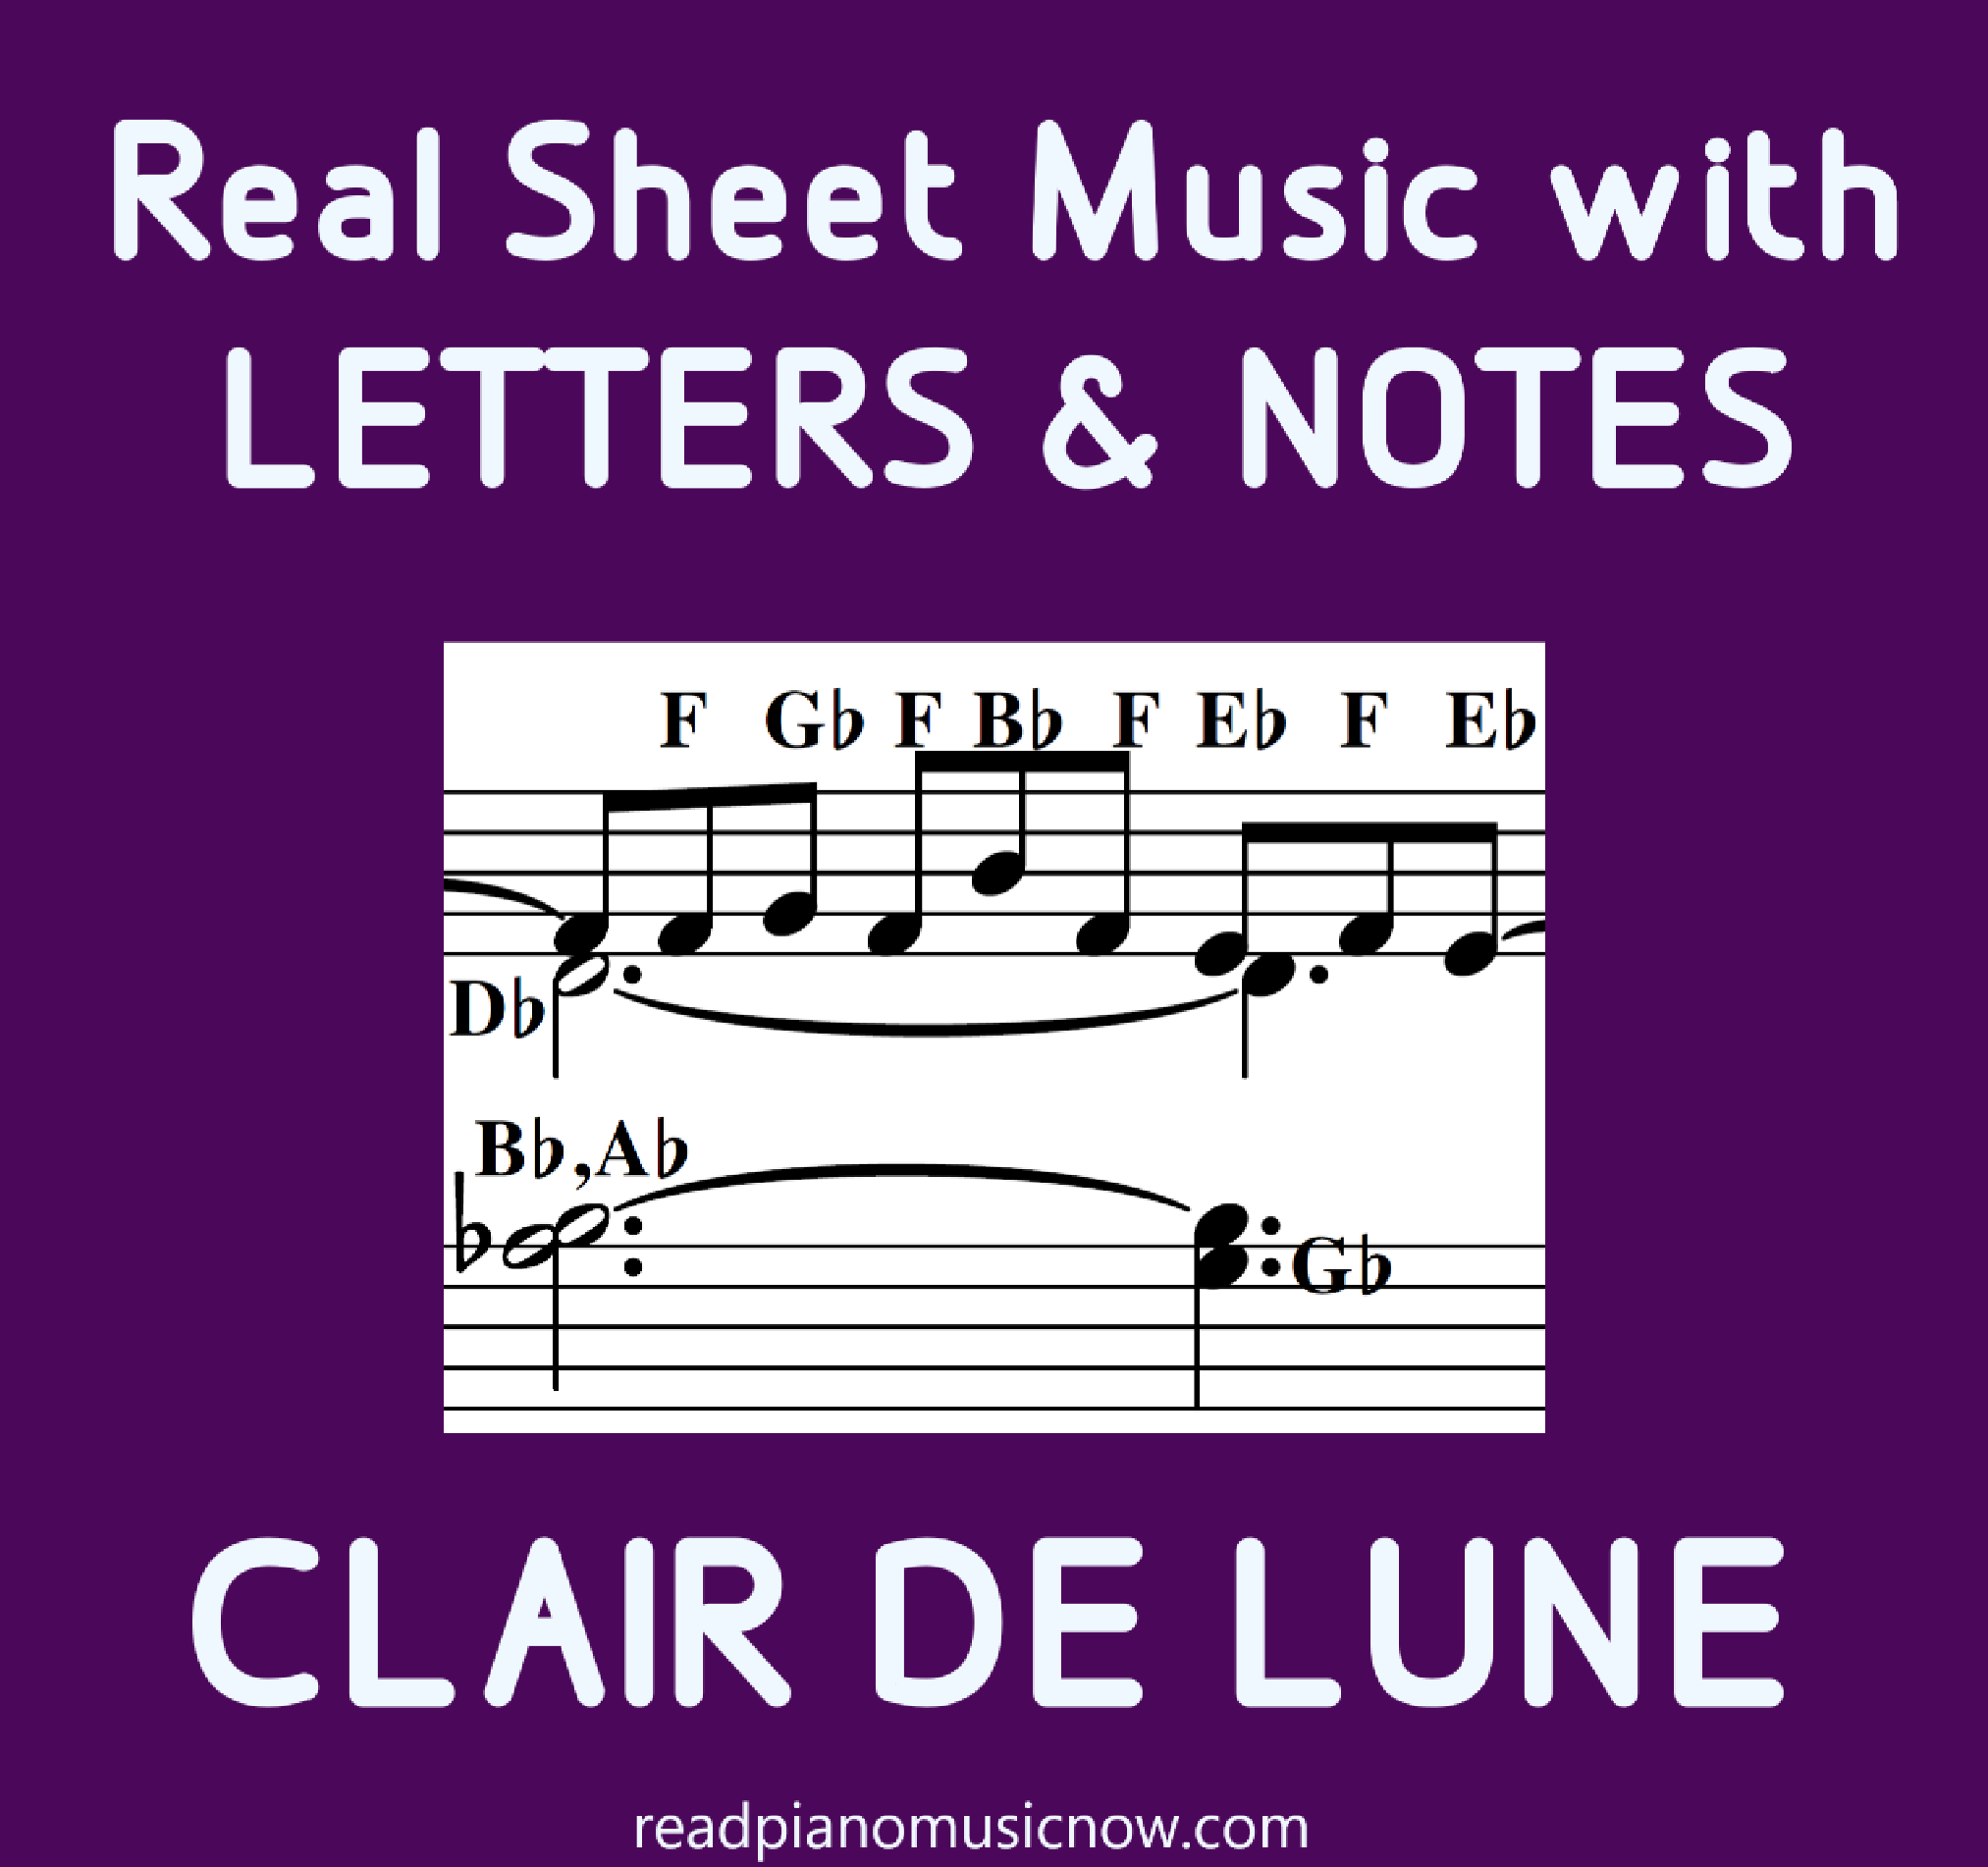 Noty Clair de Lune s písmenami - obrázok produktu.